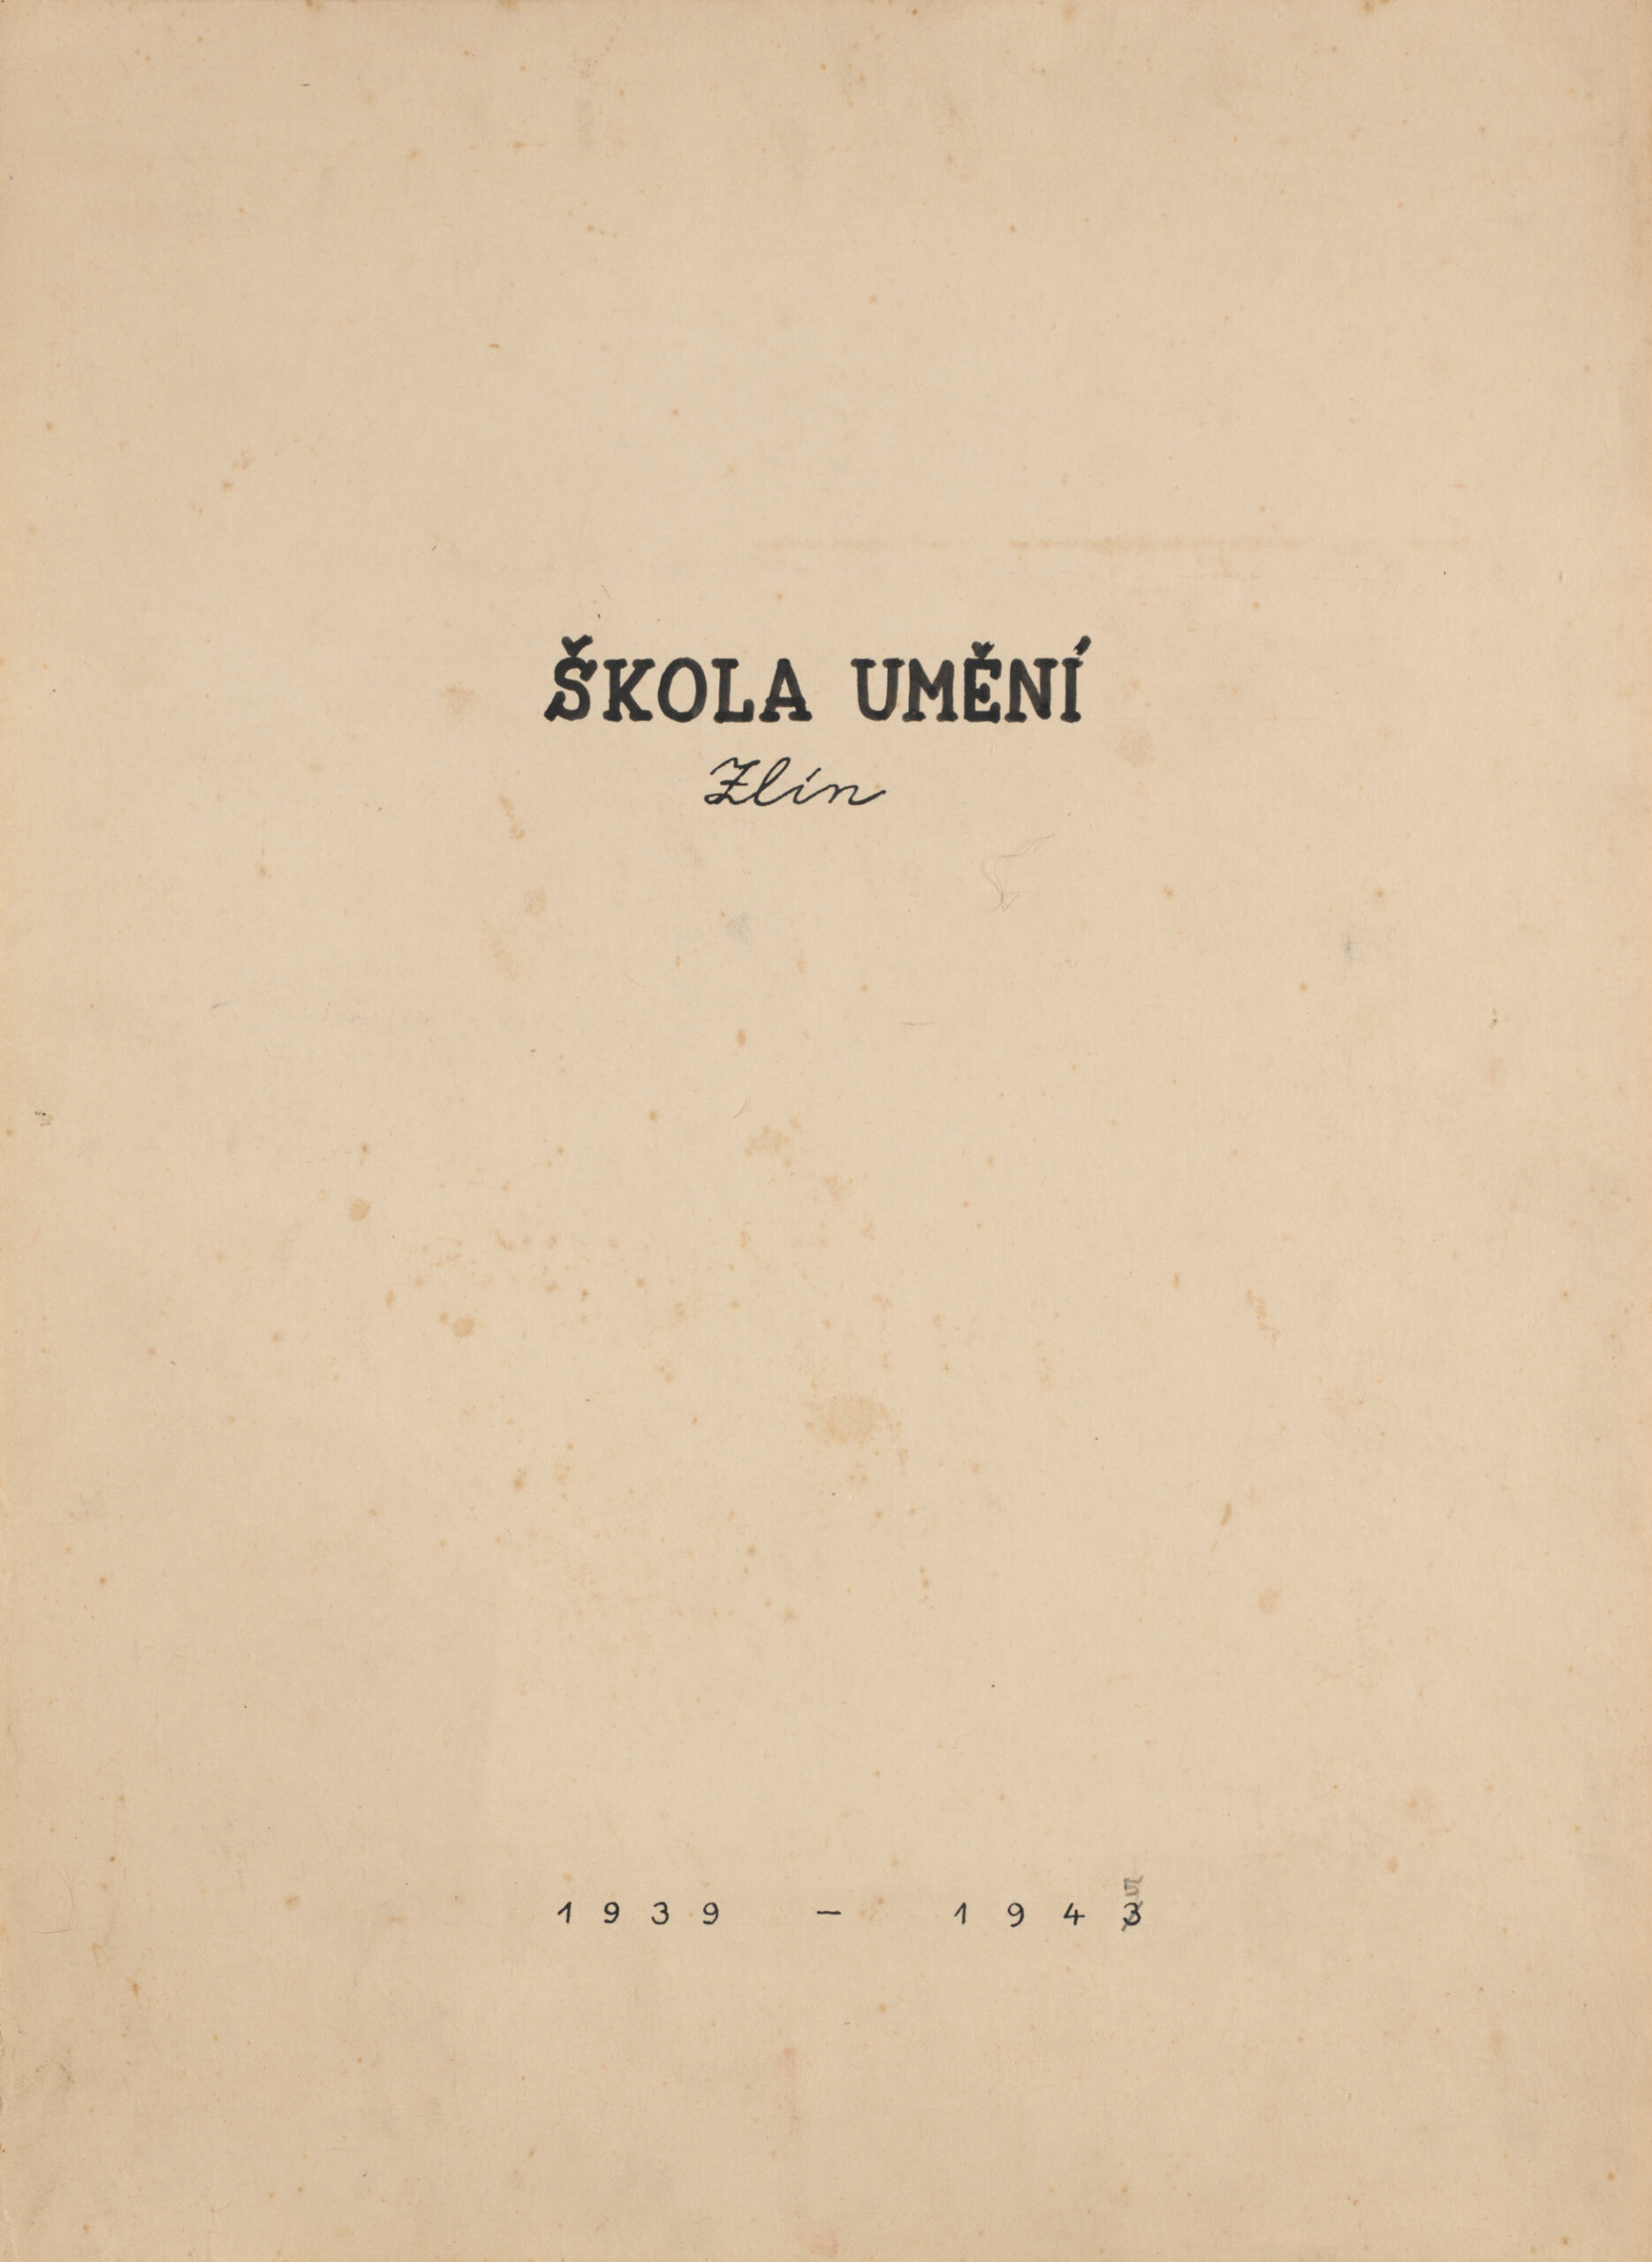 School of Arts Zlín Album - Provenance: Estate of Otakar Hudeček, Czechia